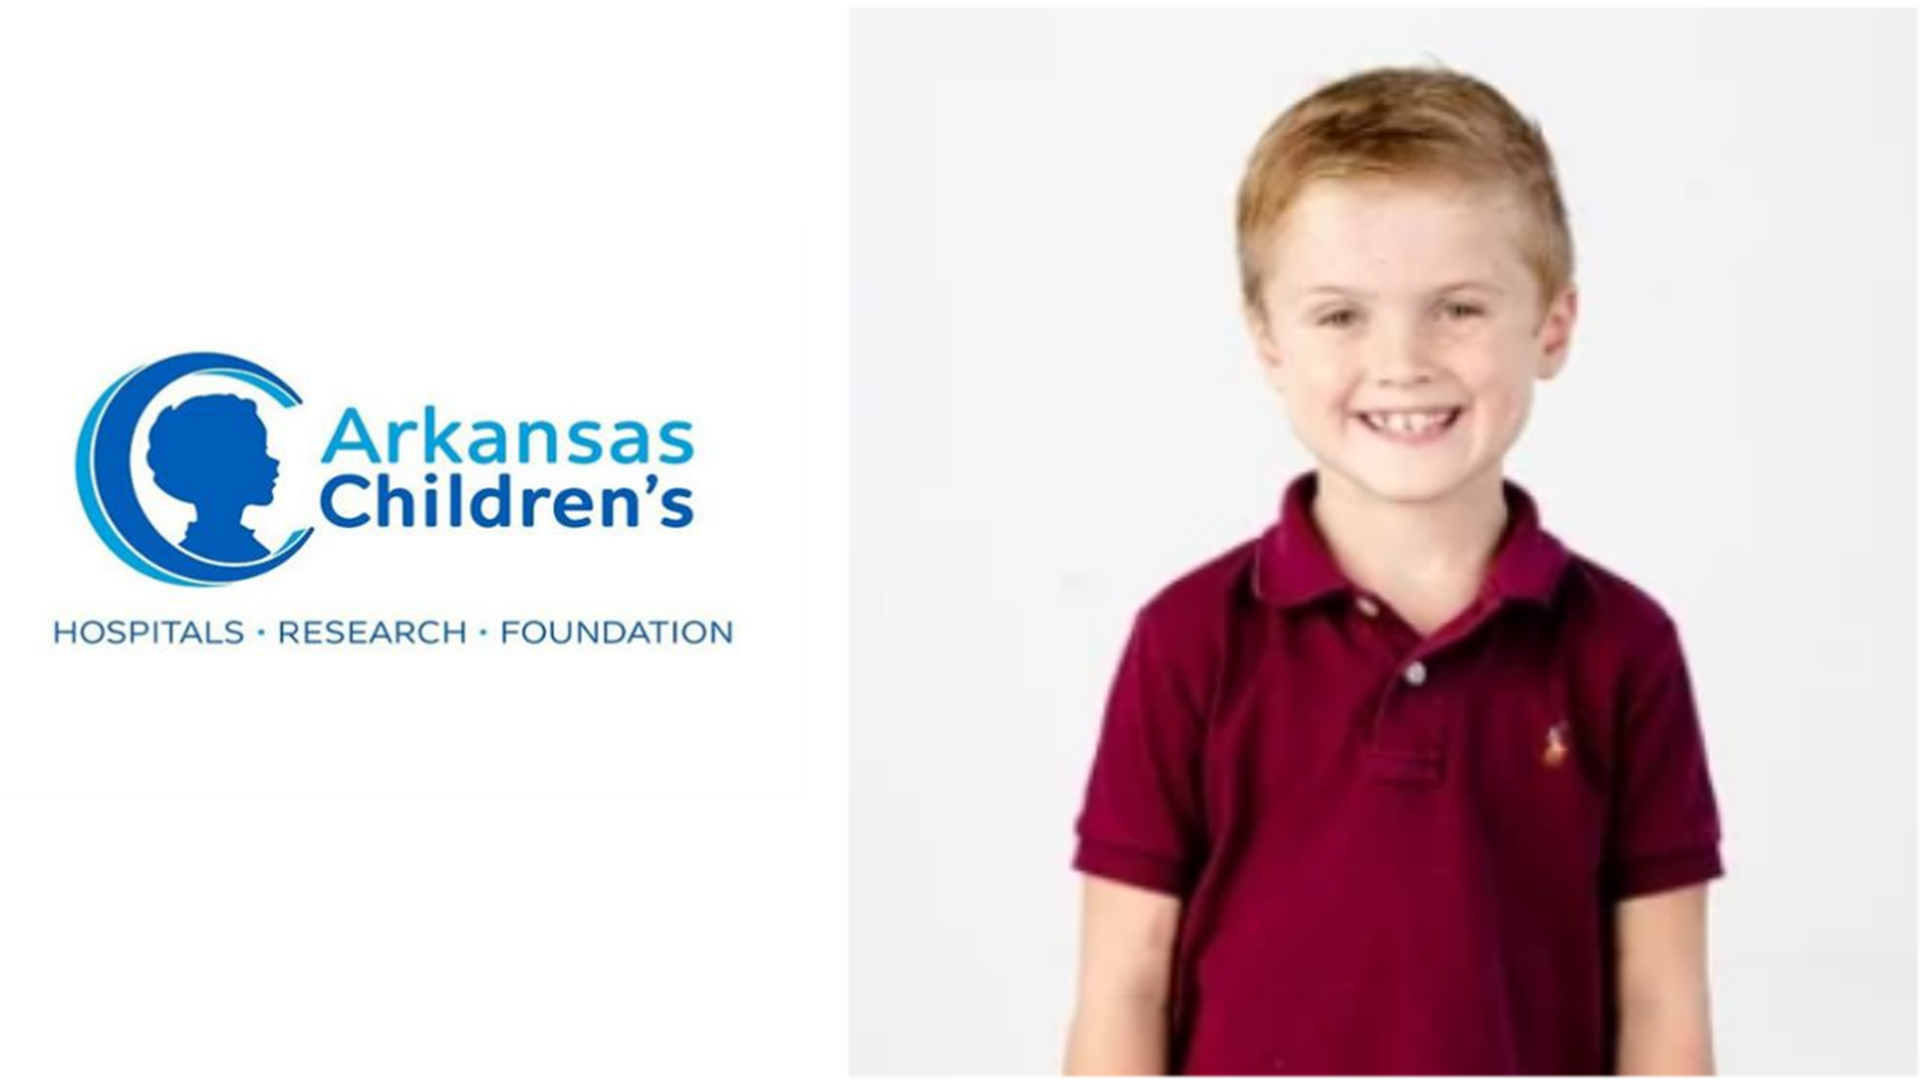 Arkansas Children’s Hospital has been a tremendous help for six-year-old Koen Smith, who has Eosinophilic Esophagitis.